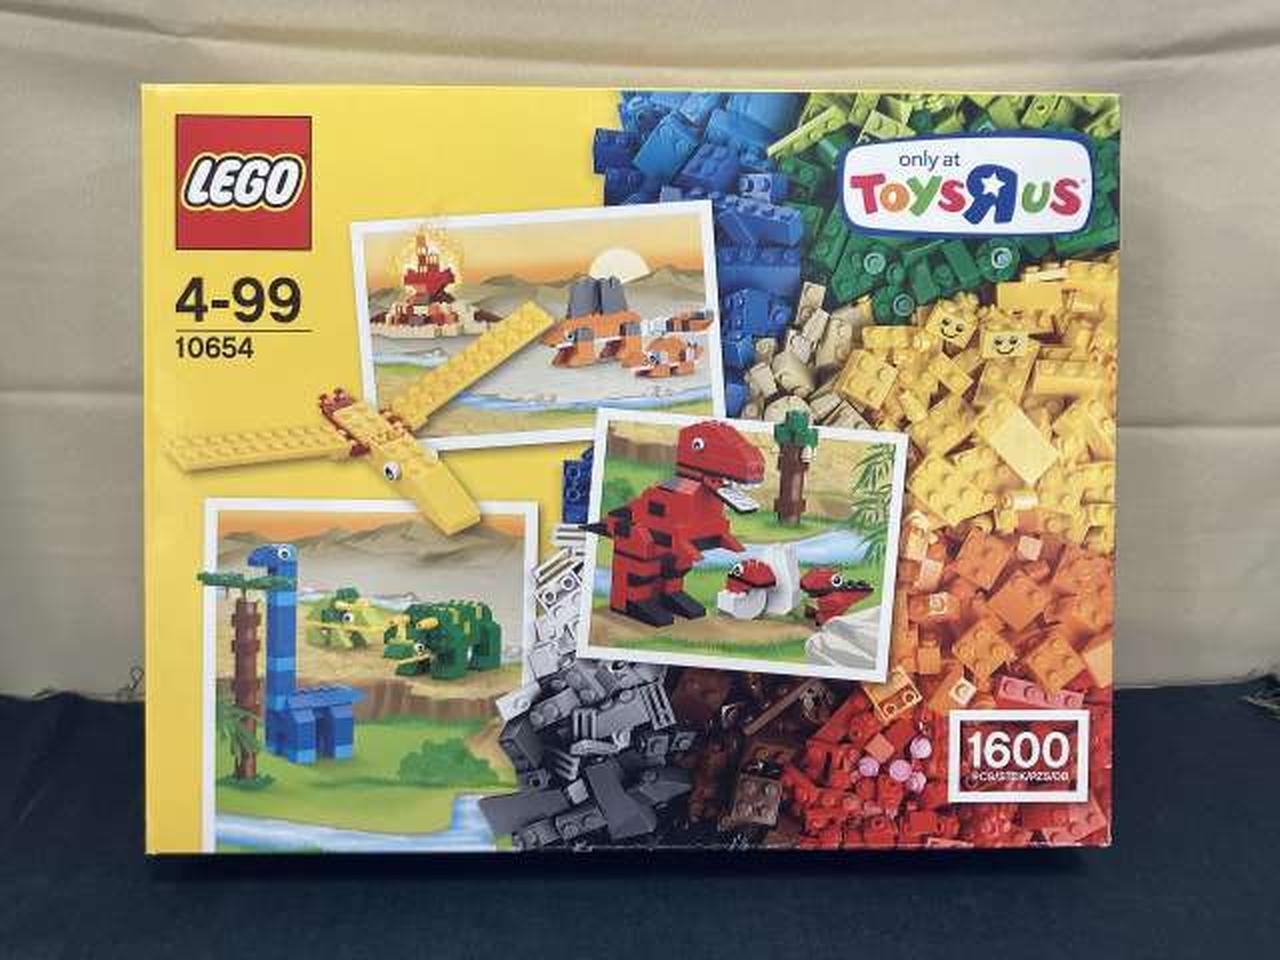 LEGO 10654 [Unopened] Toys“R”s Limited Lego Idea Parts 1600